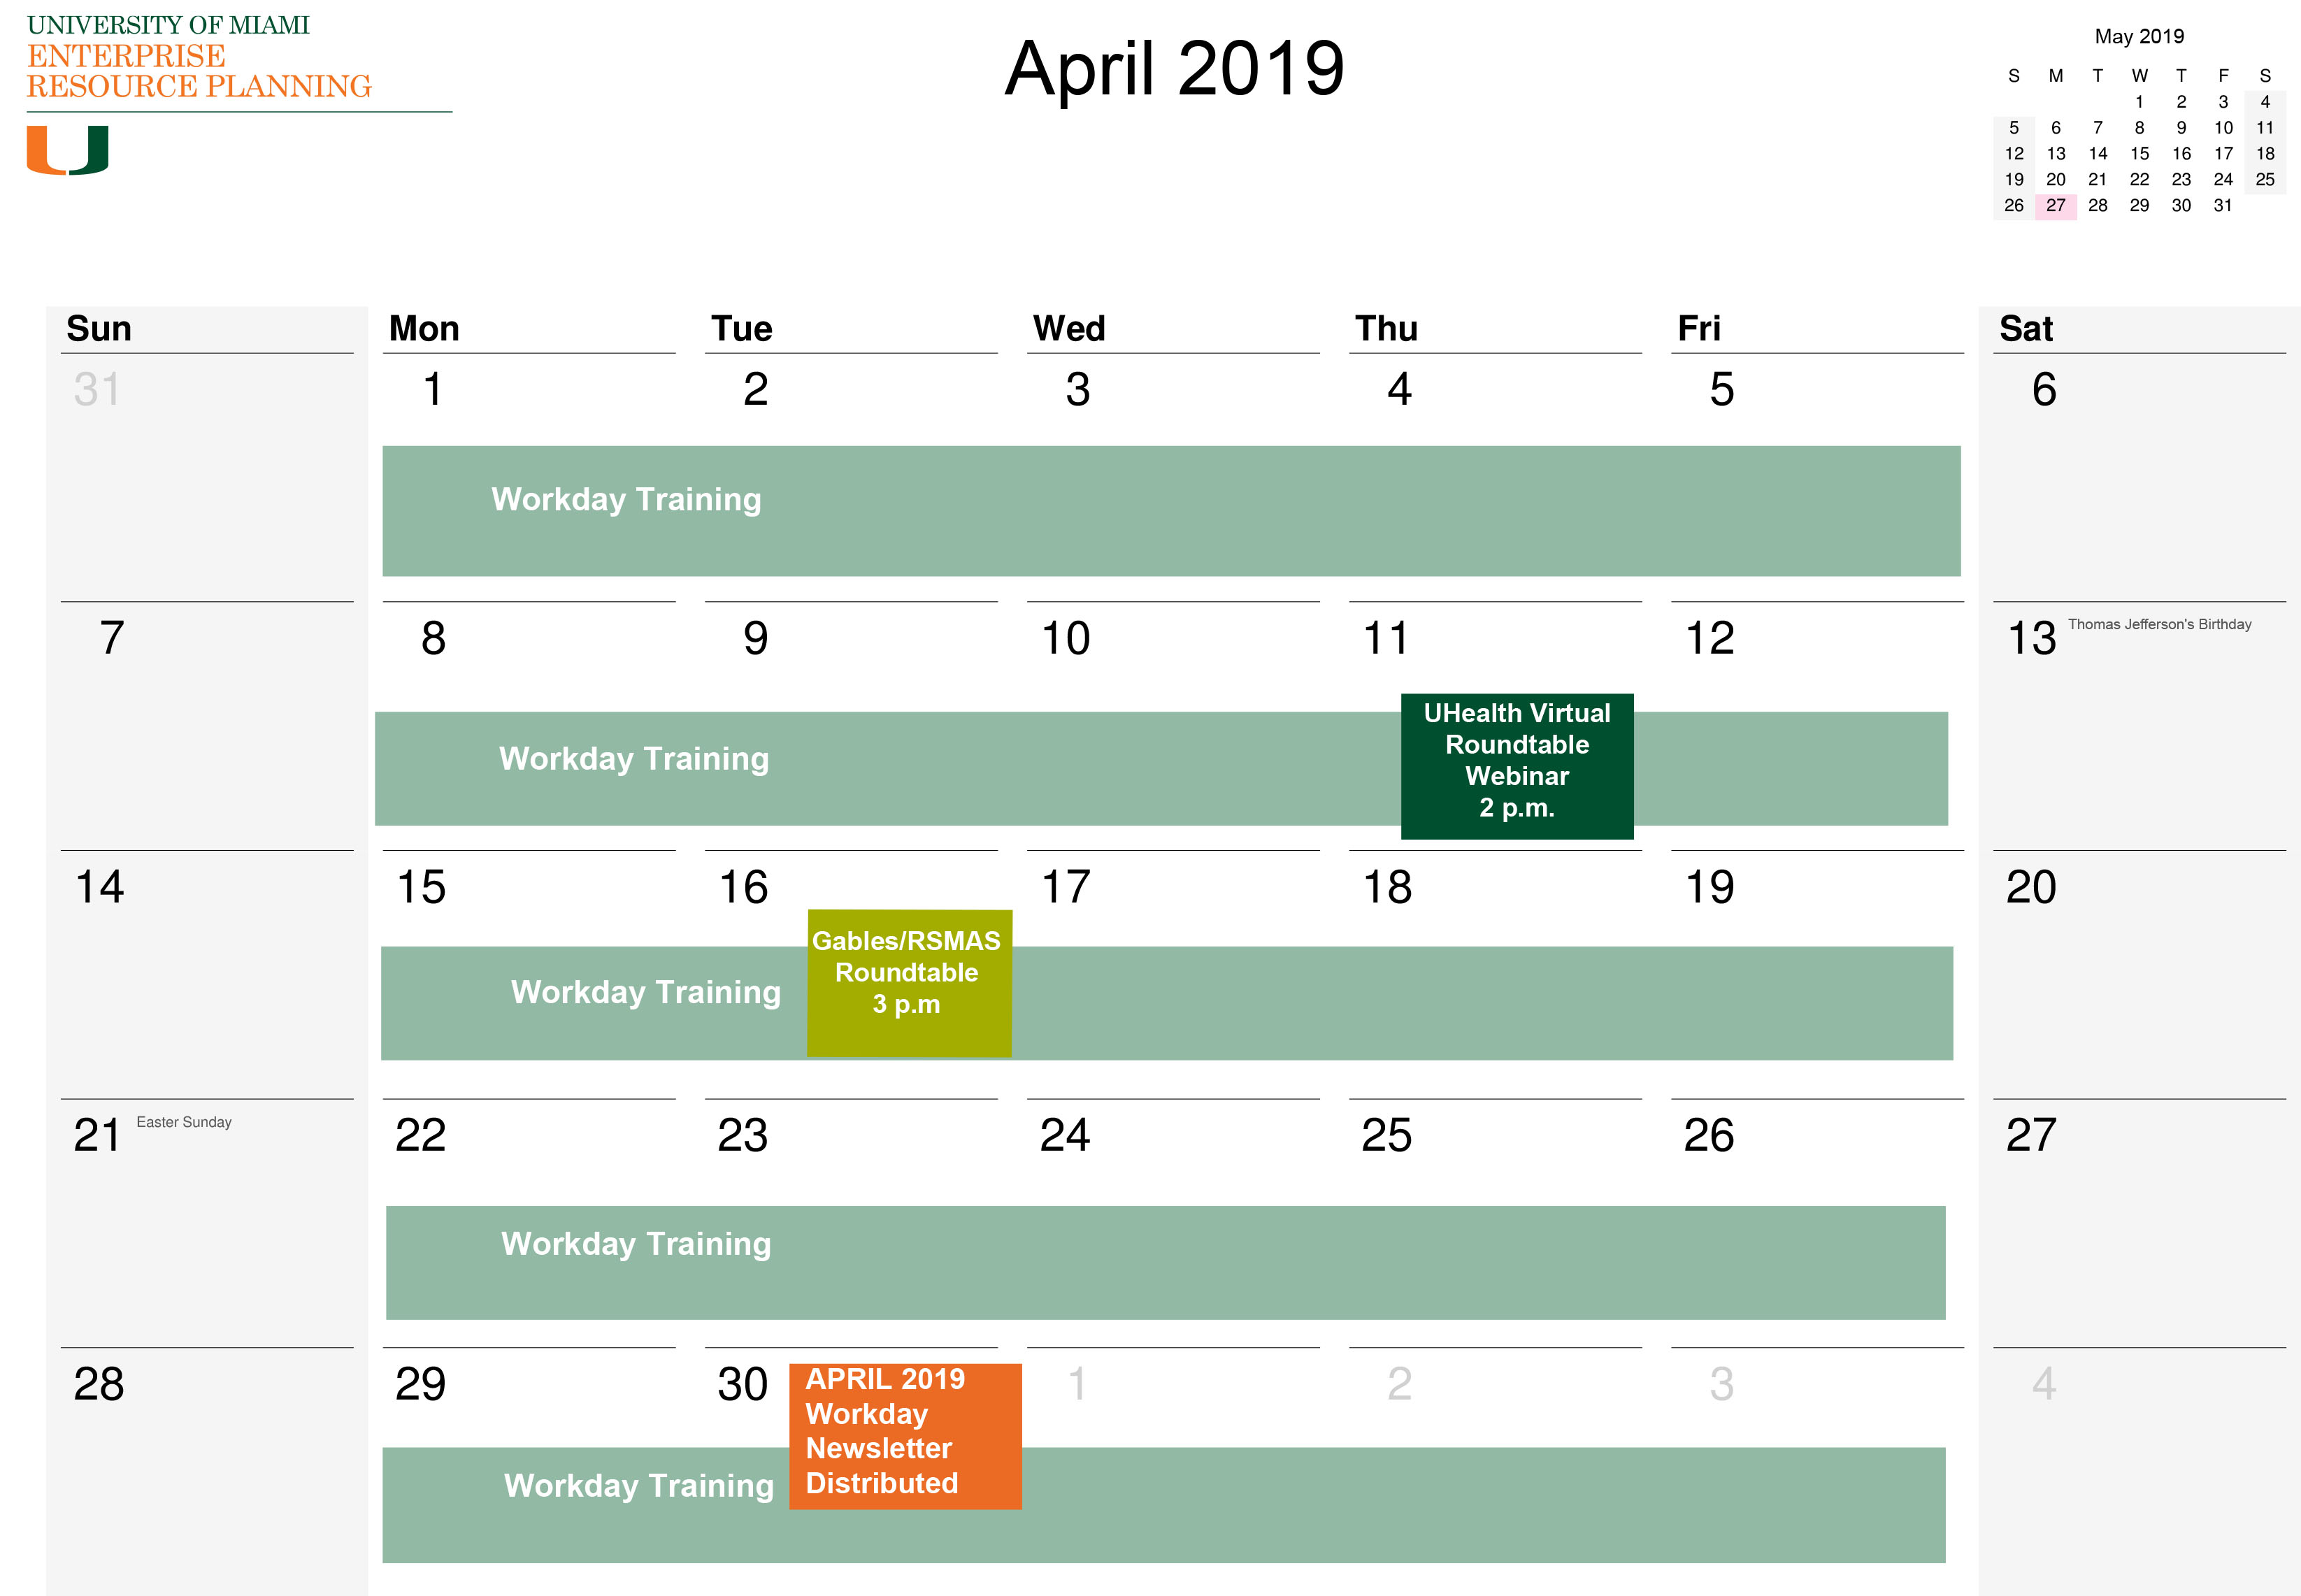 Workday Event Calendar_April 2019